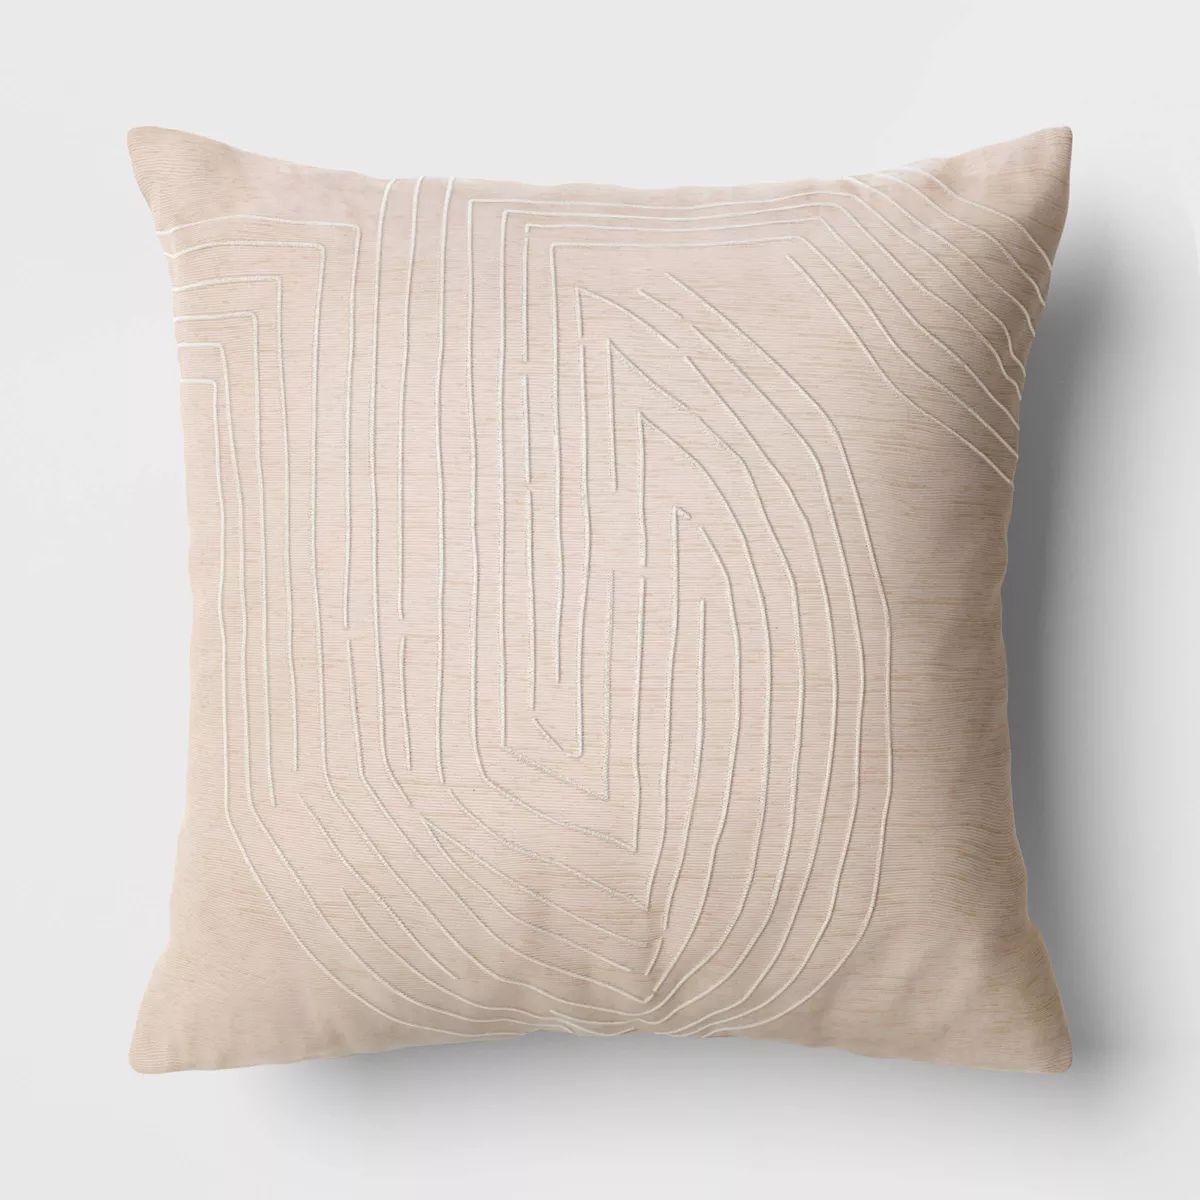 Oversized Geometric Patterned Metallic Embroidered Velvet Square Throw Pillow - Threshold™ | Target